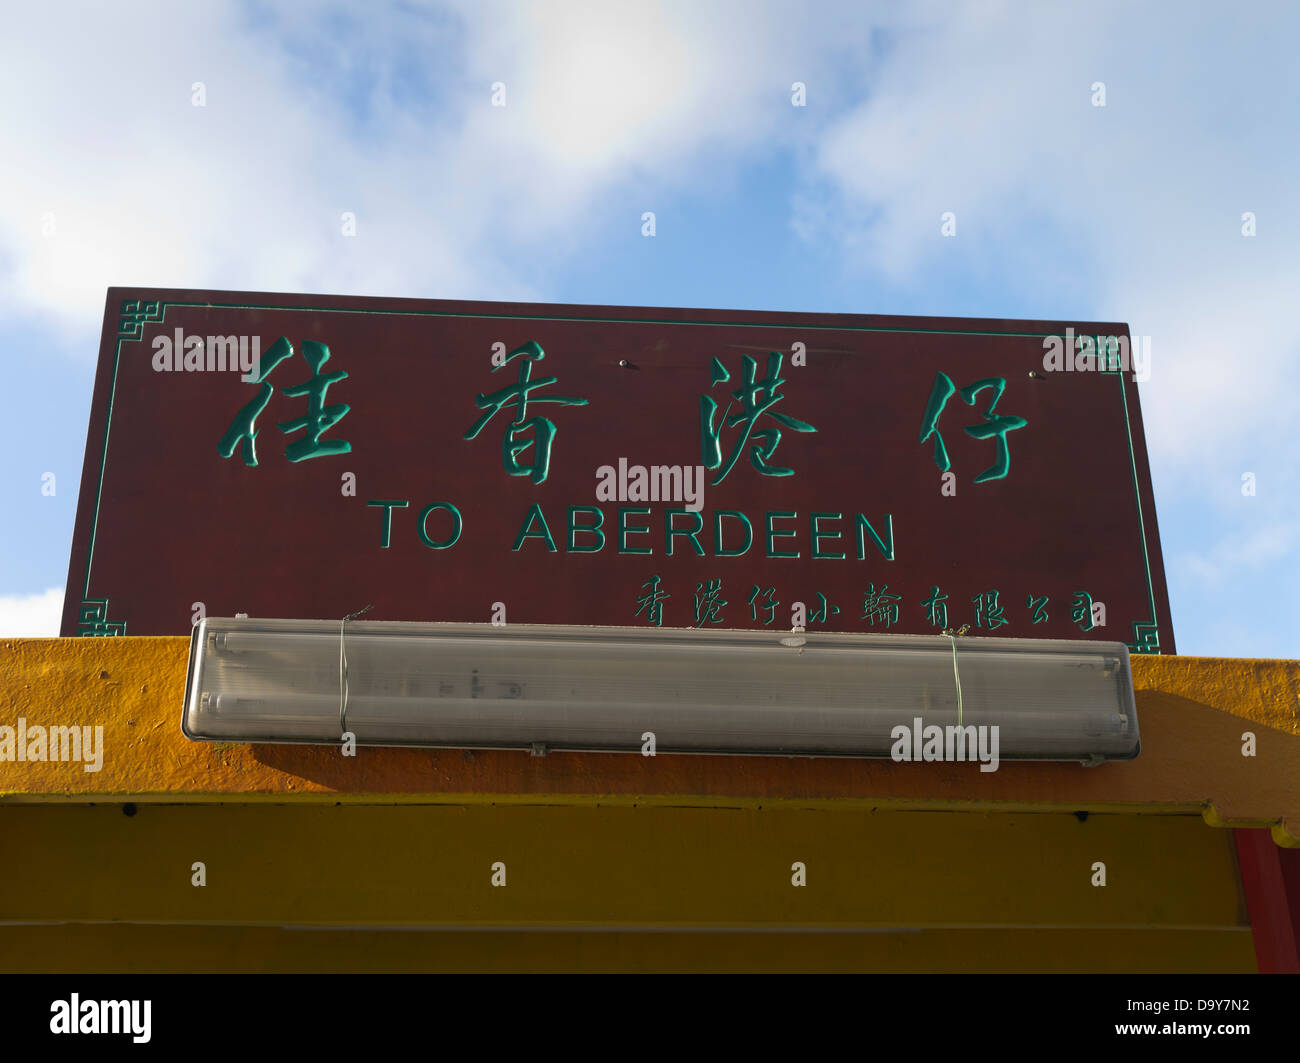 dh Aberdeen Harbour ABERDEEN HONG KONG chino bilingüe letras del calligraph Y el signo inglés AP Lei Chau ferry signpost carta de caligrafía puerto Foto de stock